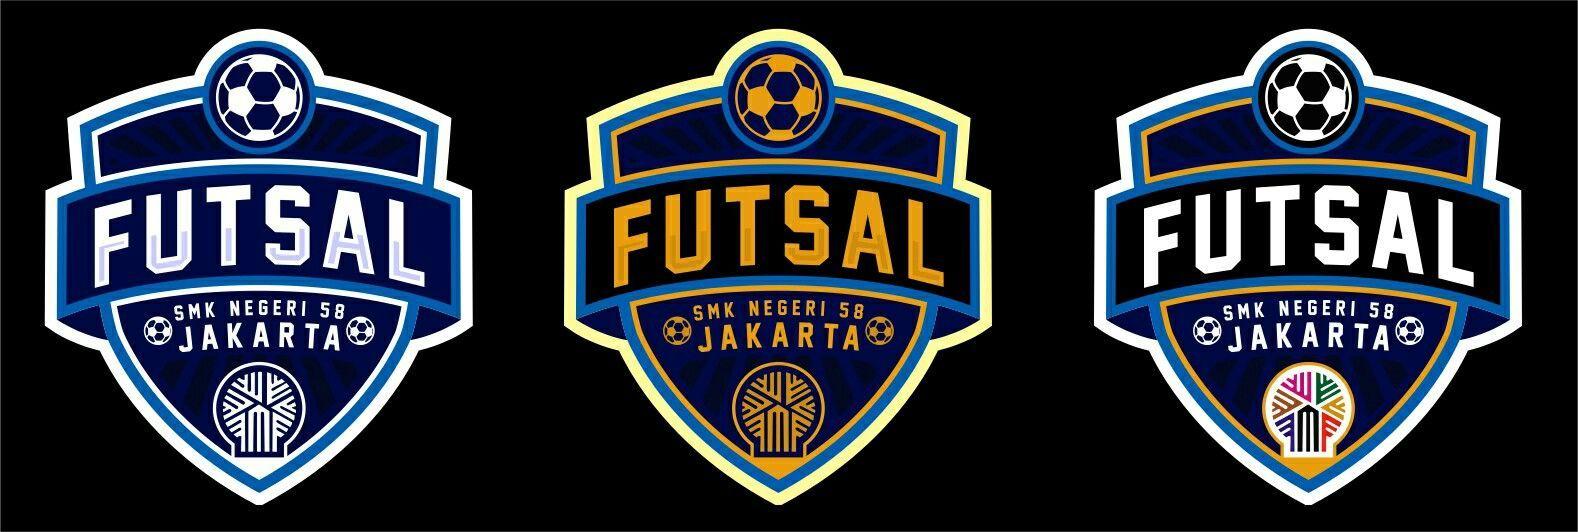 Futsal Logo - Logo Design for futsal team 58 Vocational High School Jakarta ...